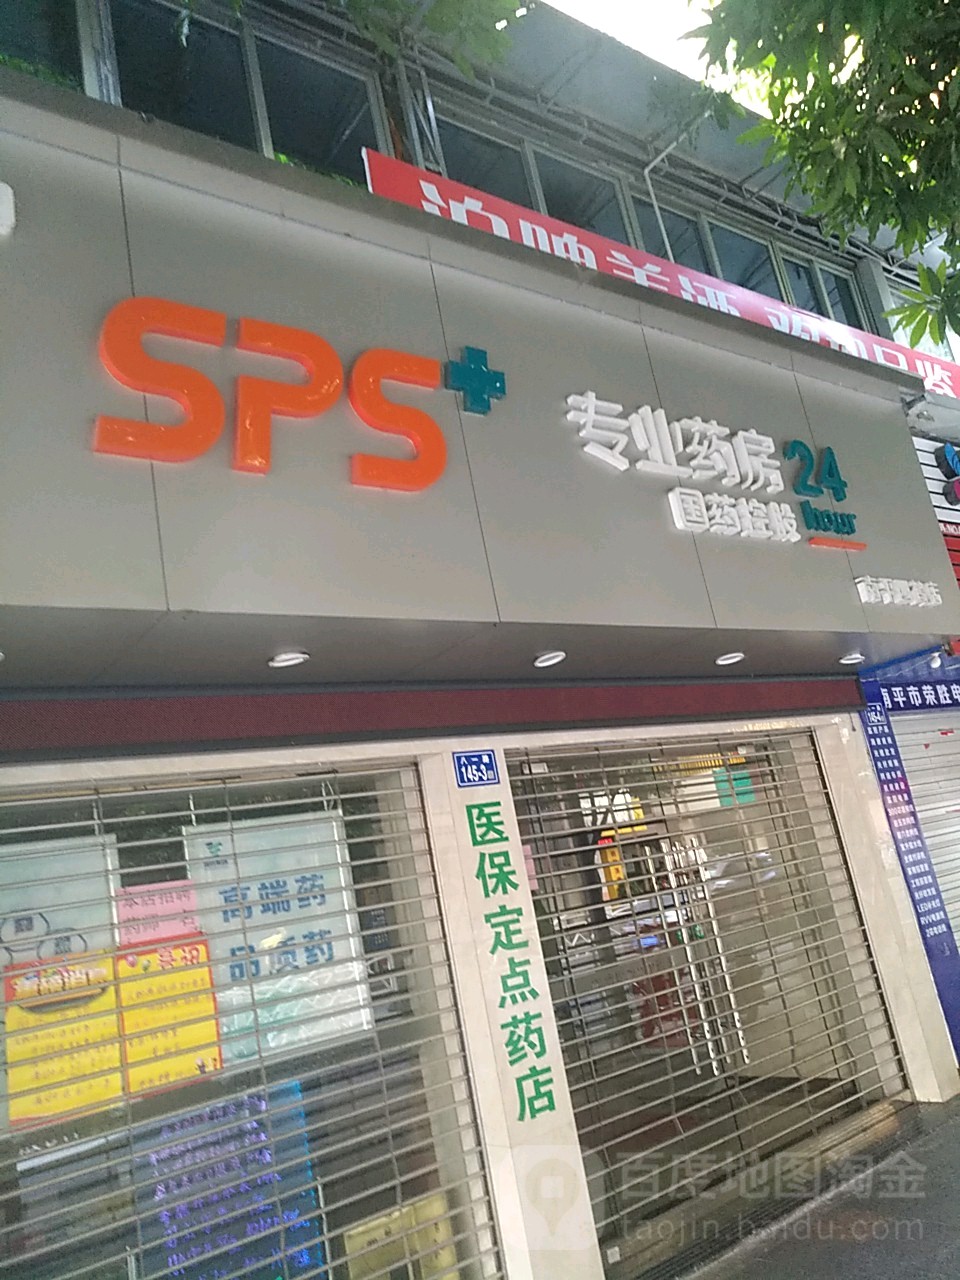 SPS+24小時專業藥房